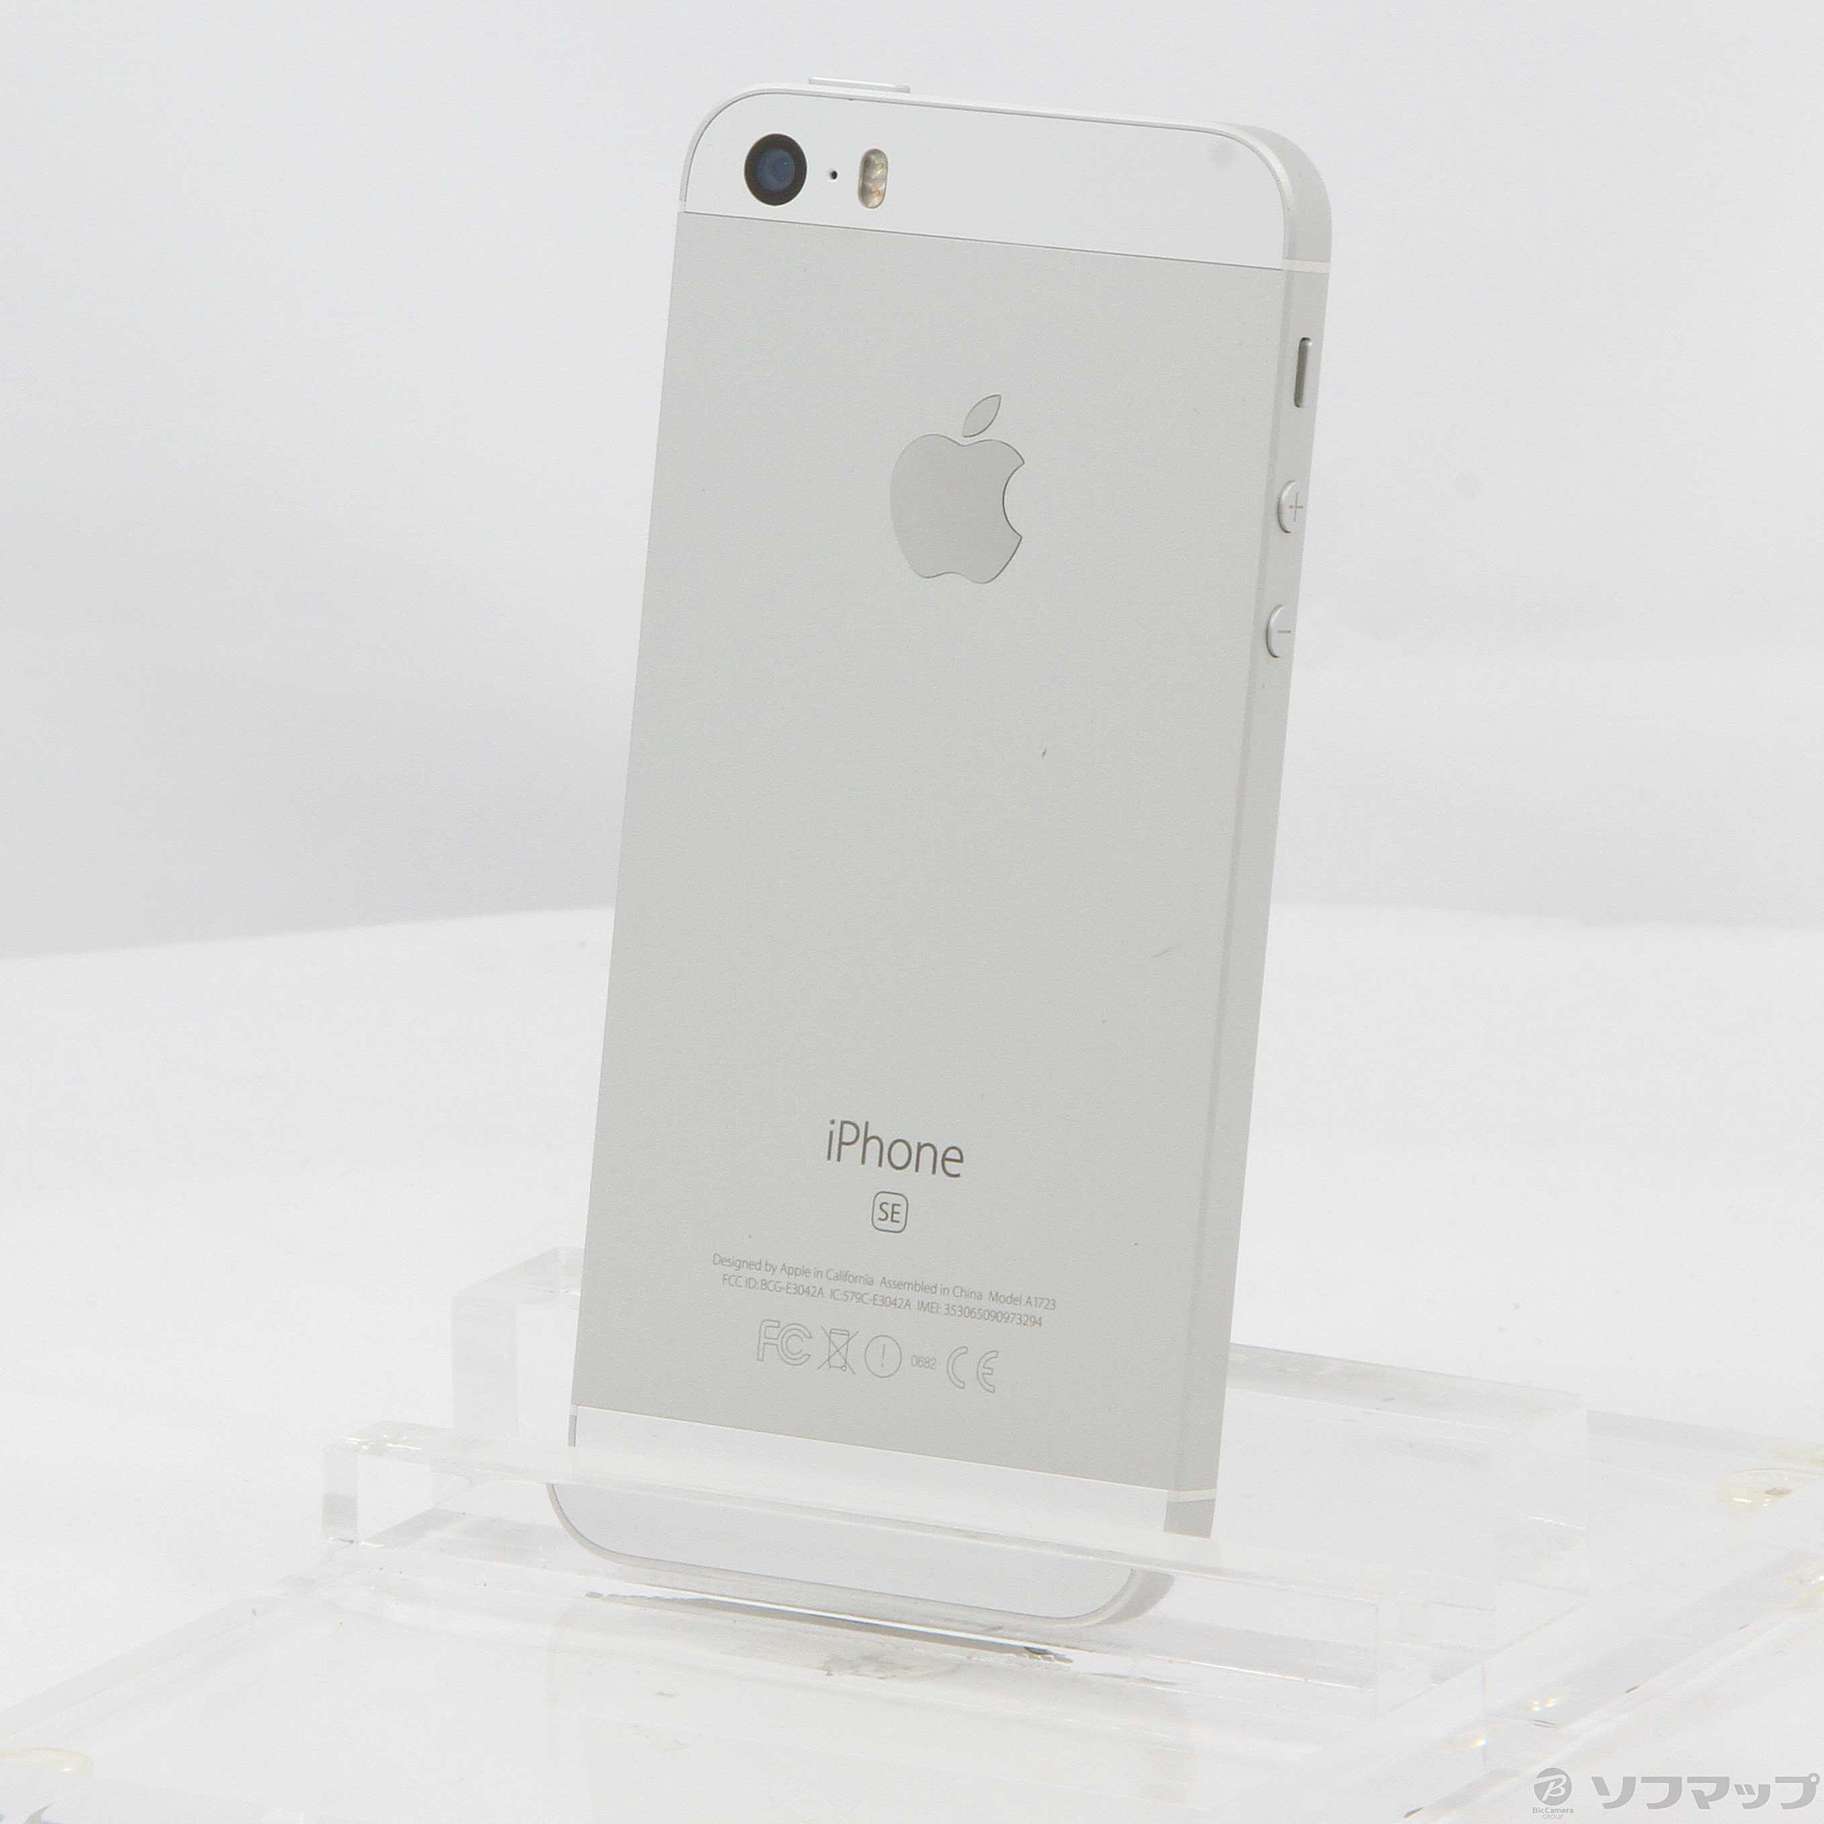 iPhone SE Silver 32GB